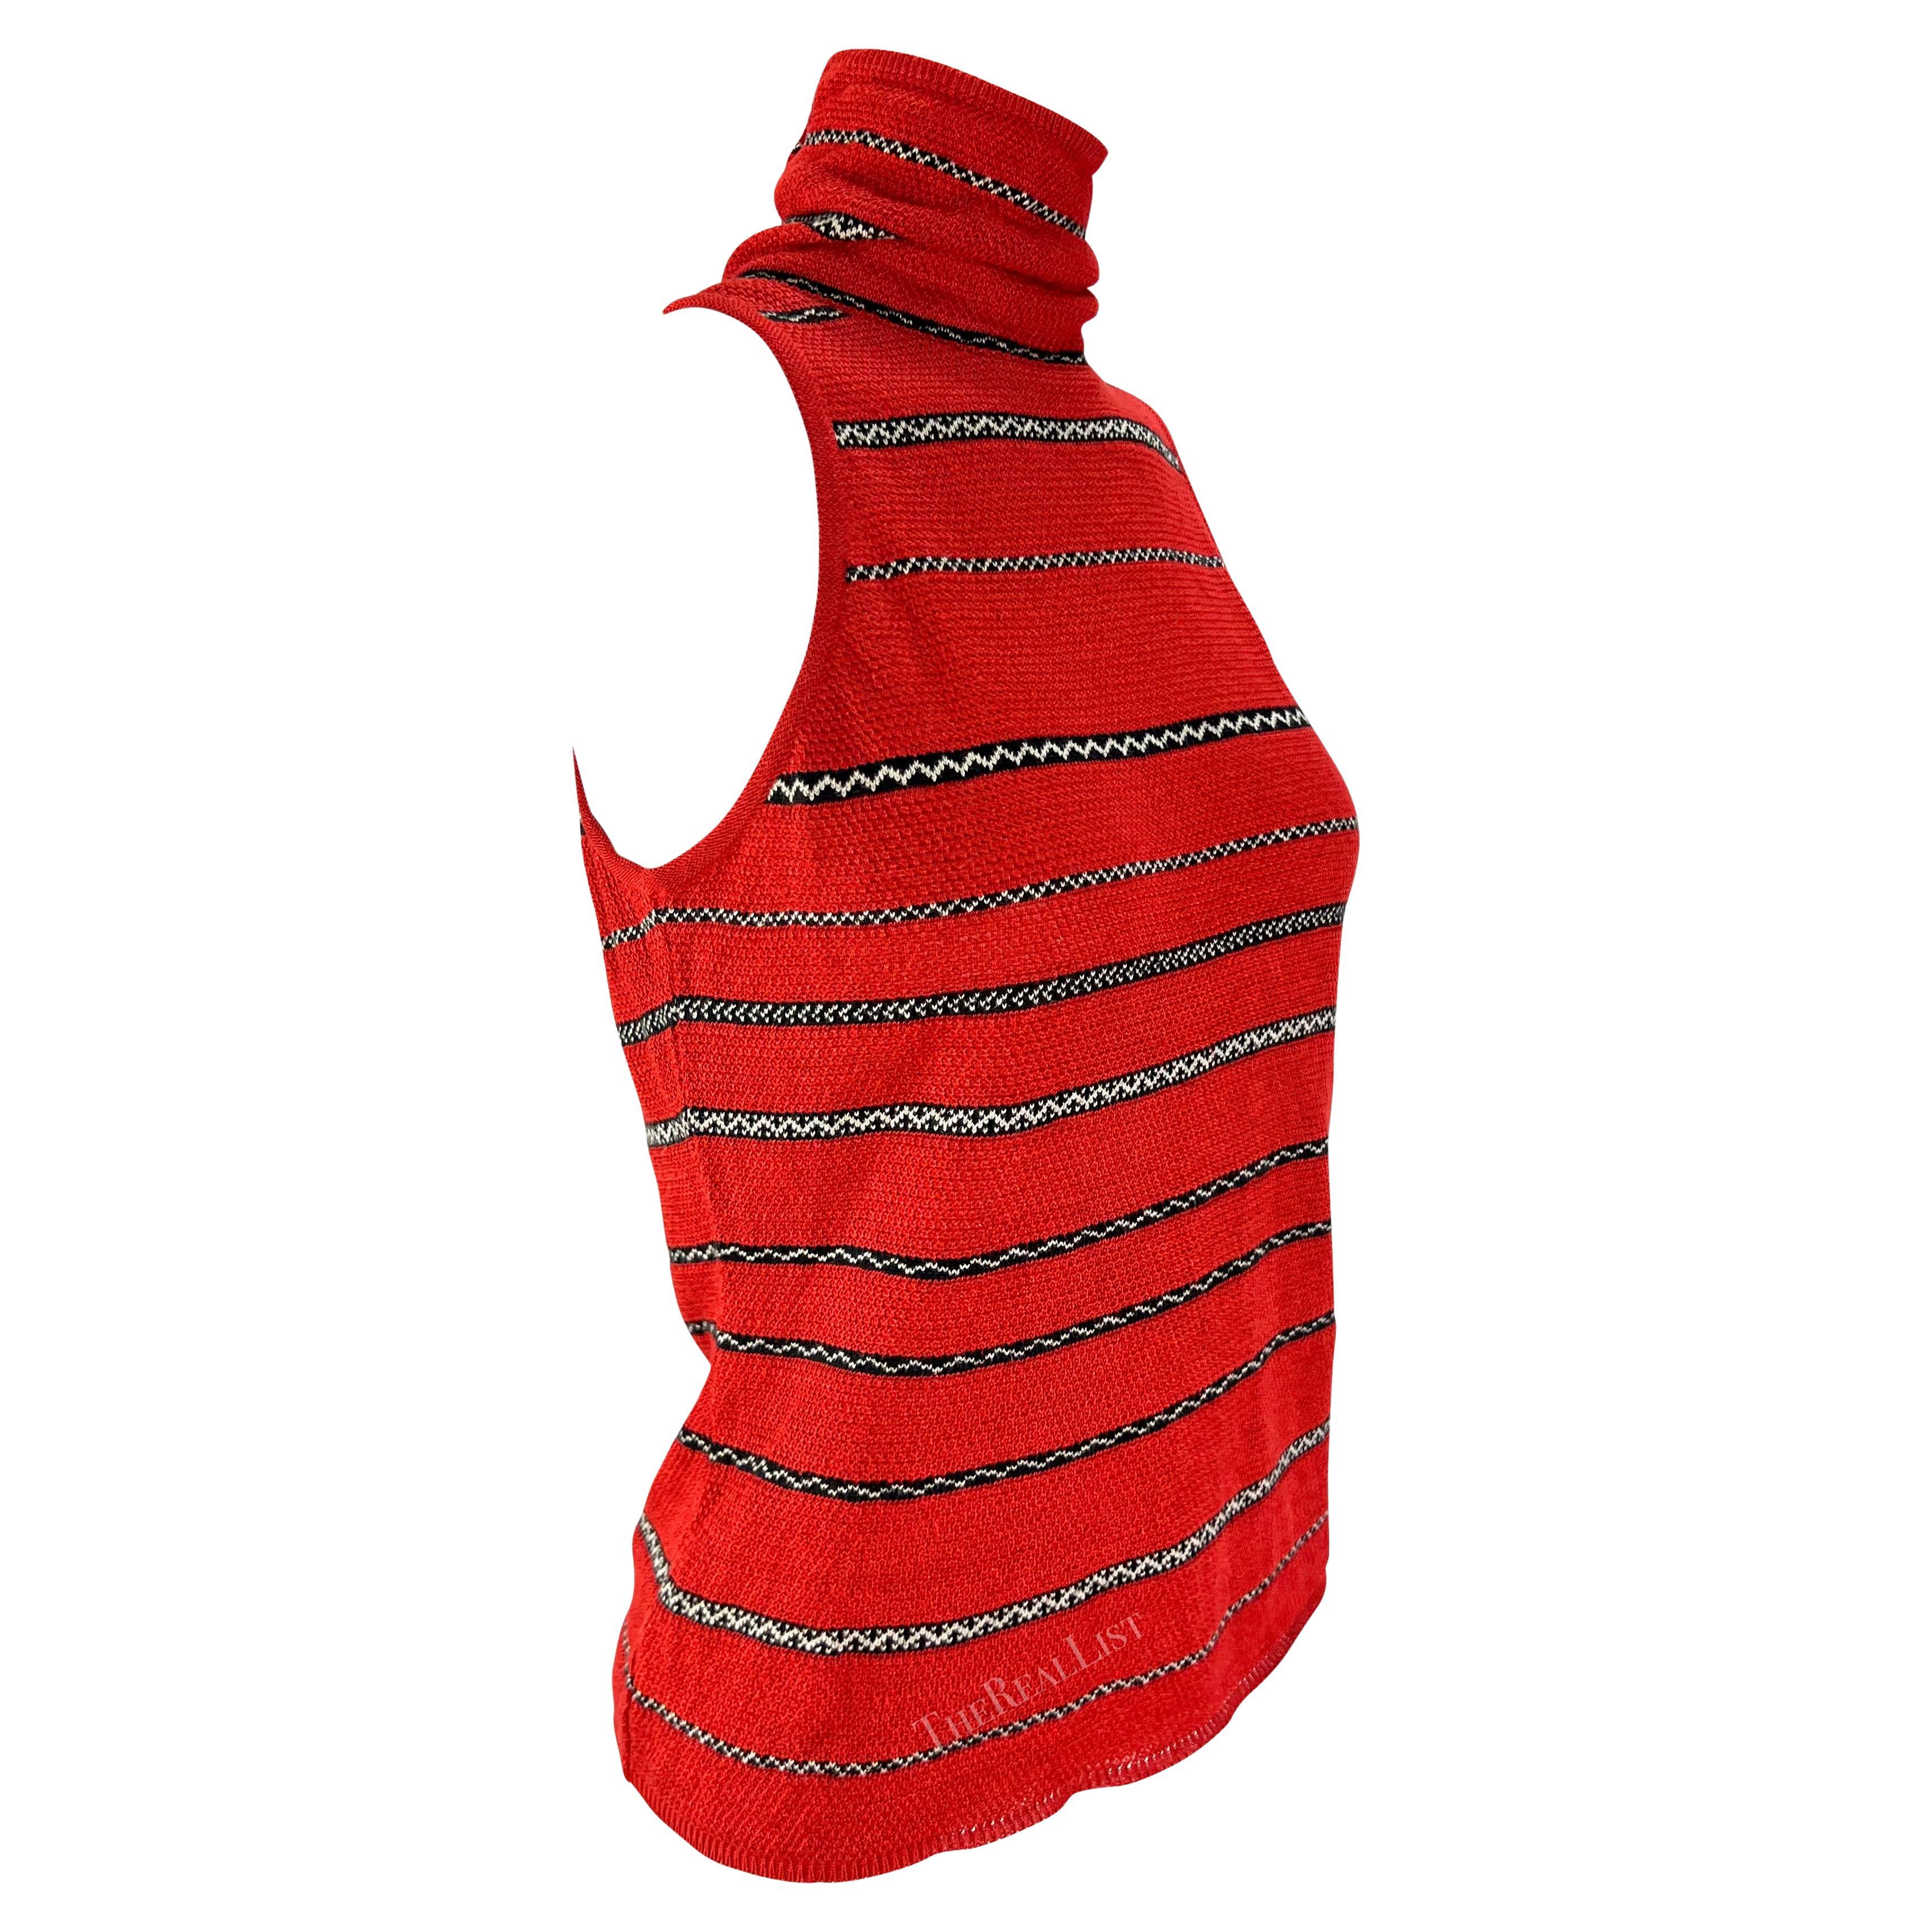 S/S 1997 Ralph Lauren Runway Ad Stretch Knit Linen Red Stripe Mock Neck Top For Sale 5